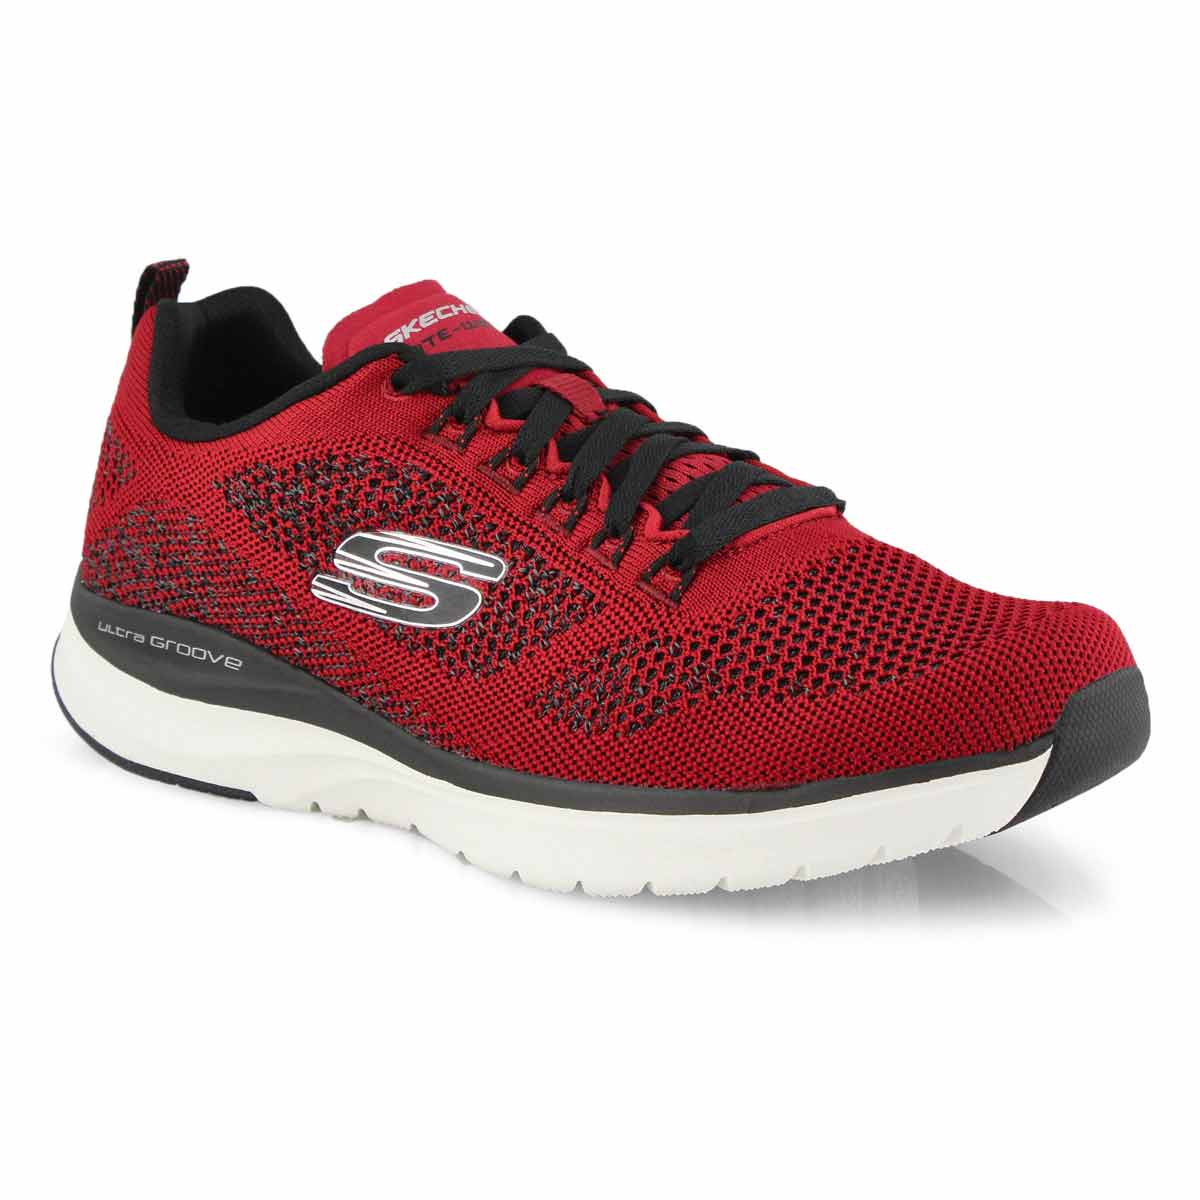 Skechers Men's Ultra Groove Running Shoes - N | SoftMoc.com